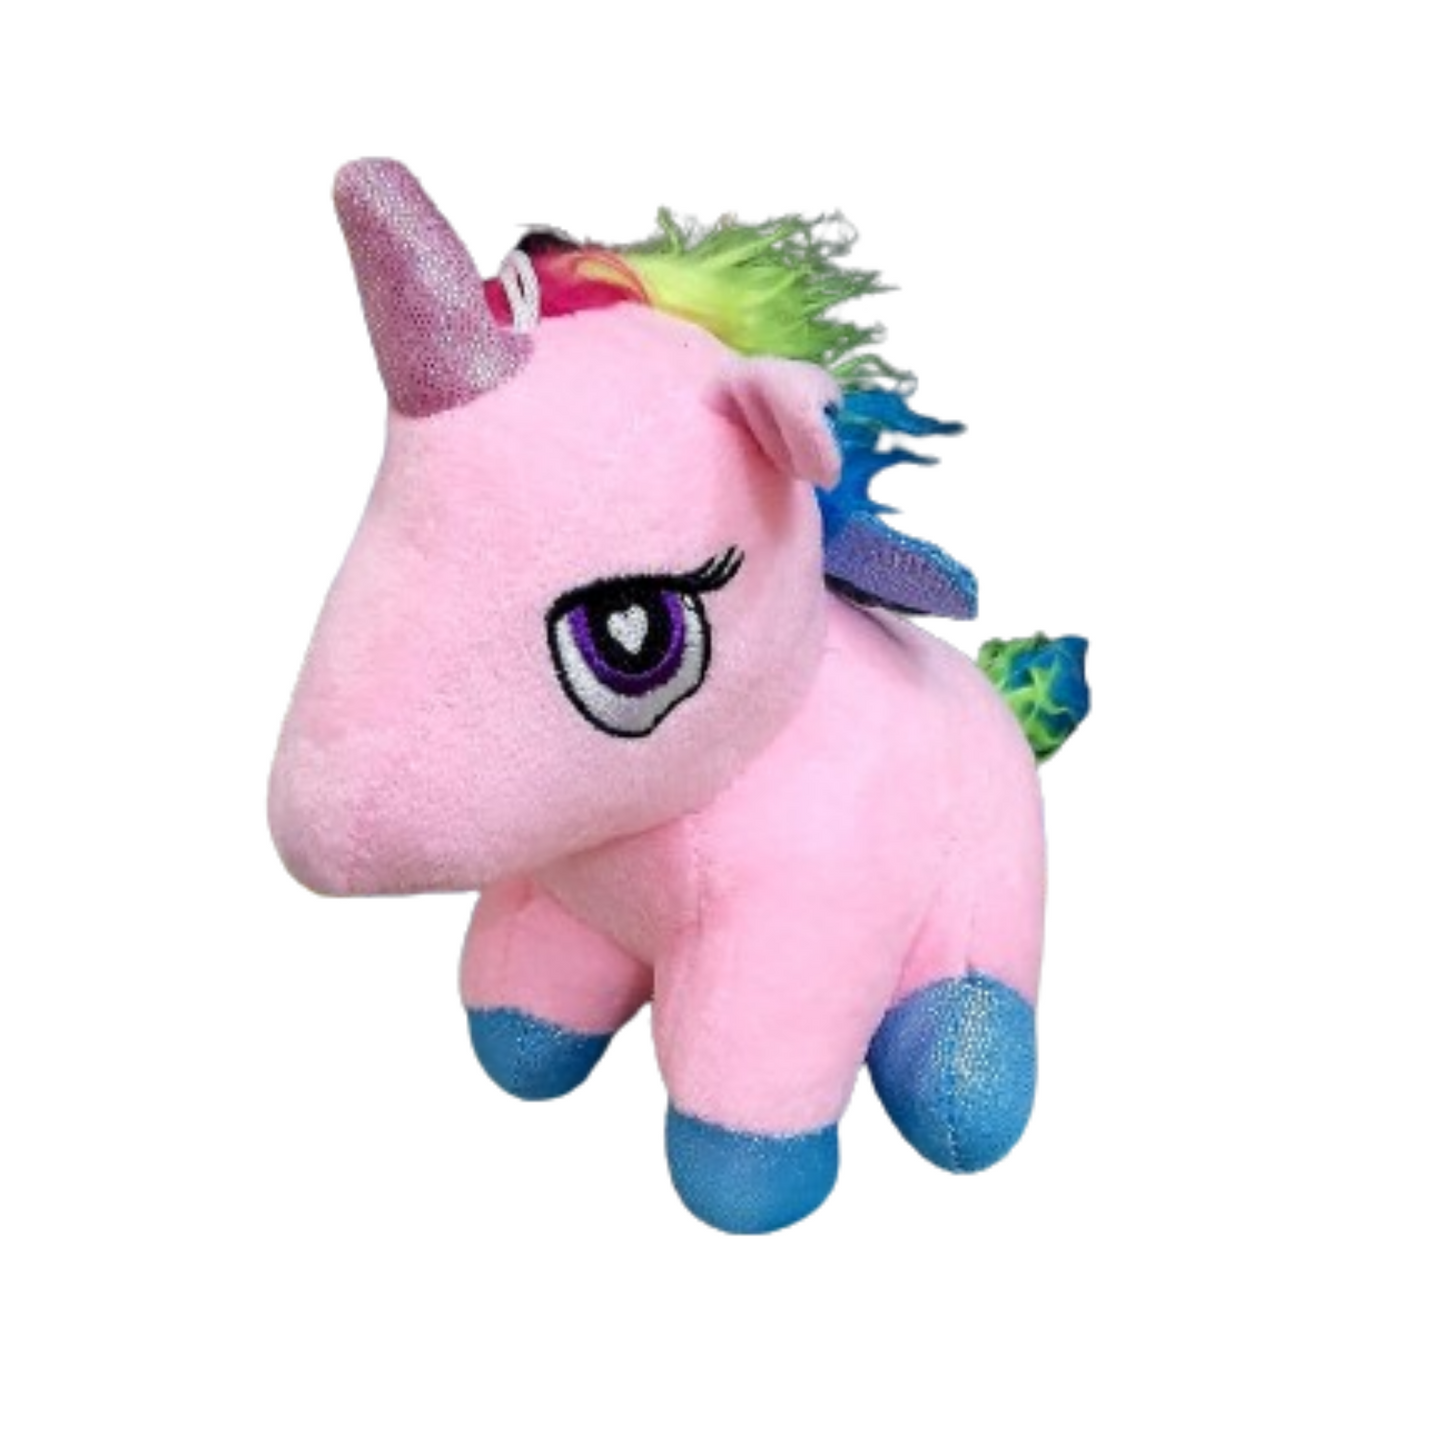 Mini Unicorn Stuffed Toy